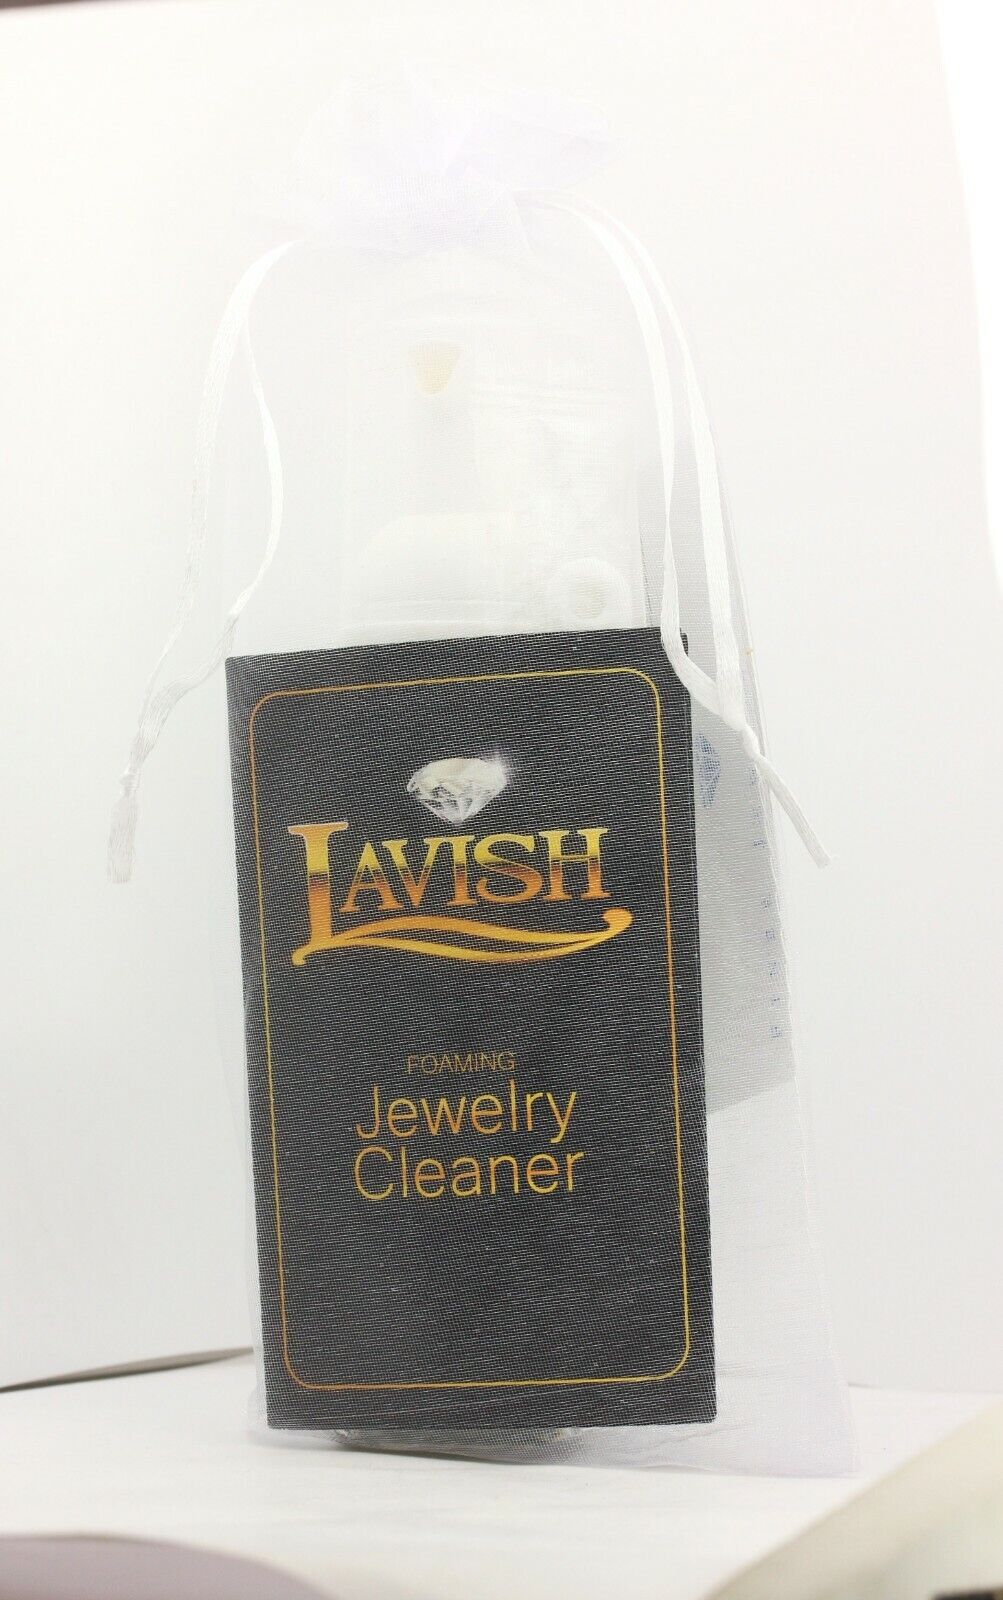 LAVISH foaming jewelry cleaner 2.5 fl oz 75ml bottle with brush